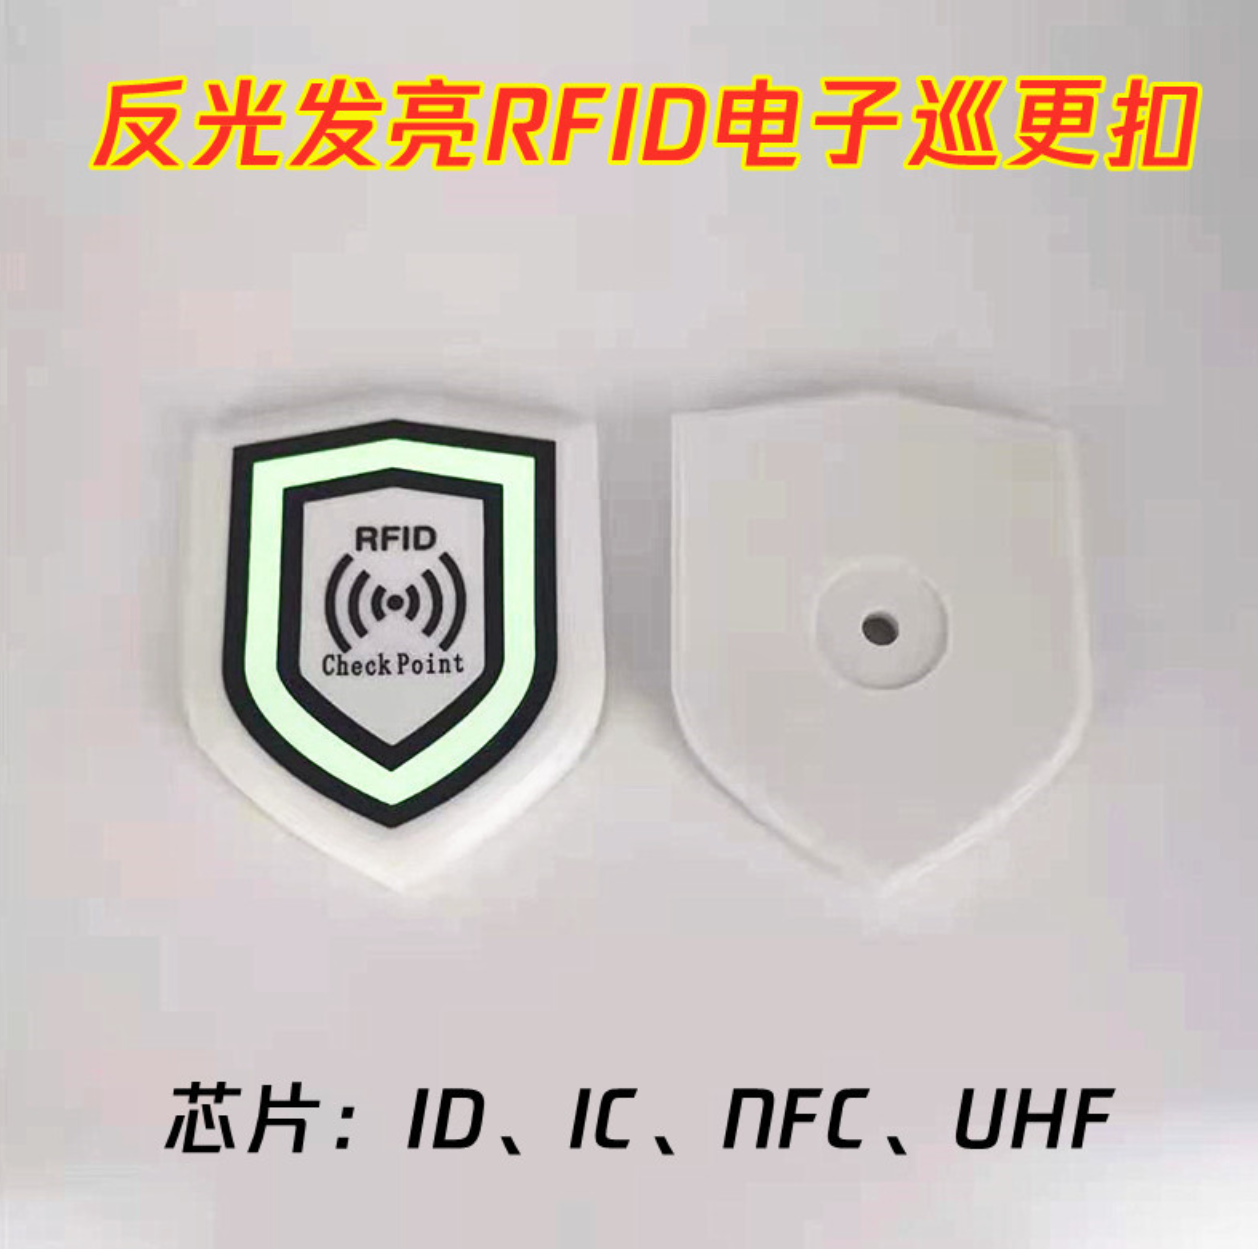 RFID保安签到巡更点地点钮电子UHF机盾形夜光标识点巡更标签图片